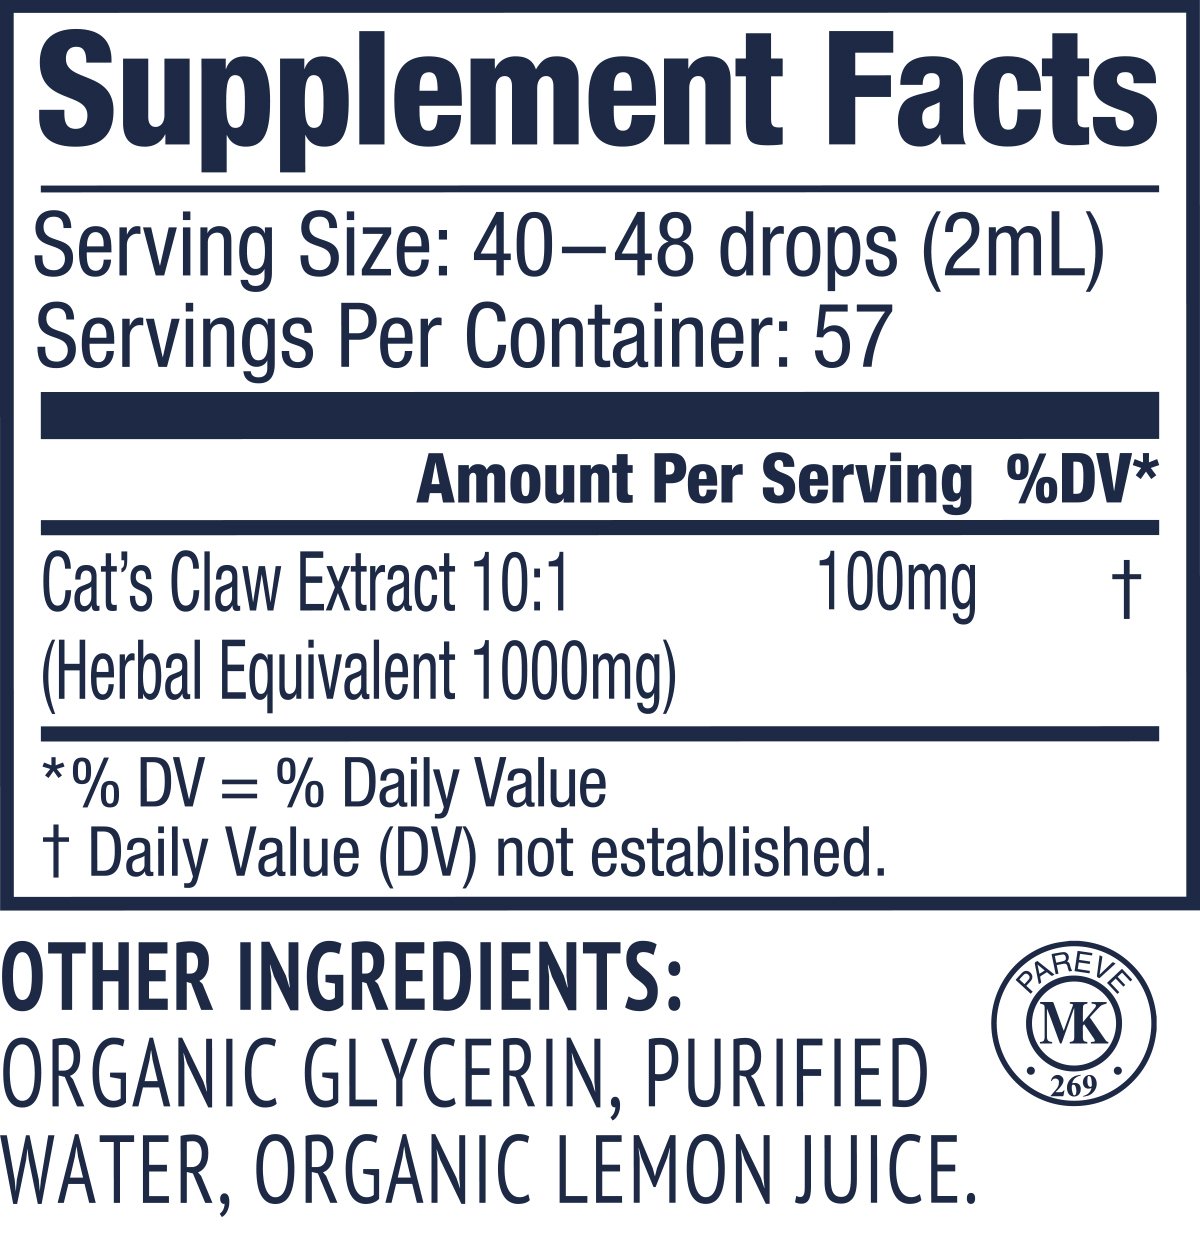 Vimergy Organic Cat's Claw 115ml